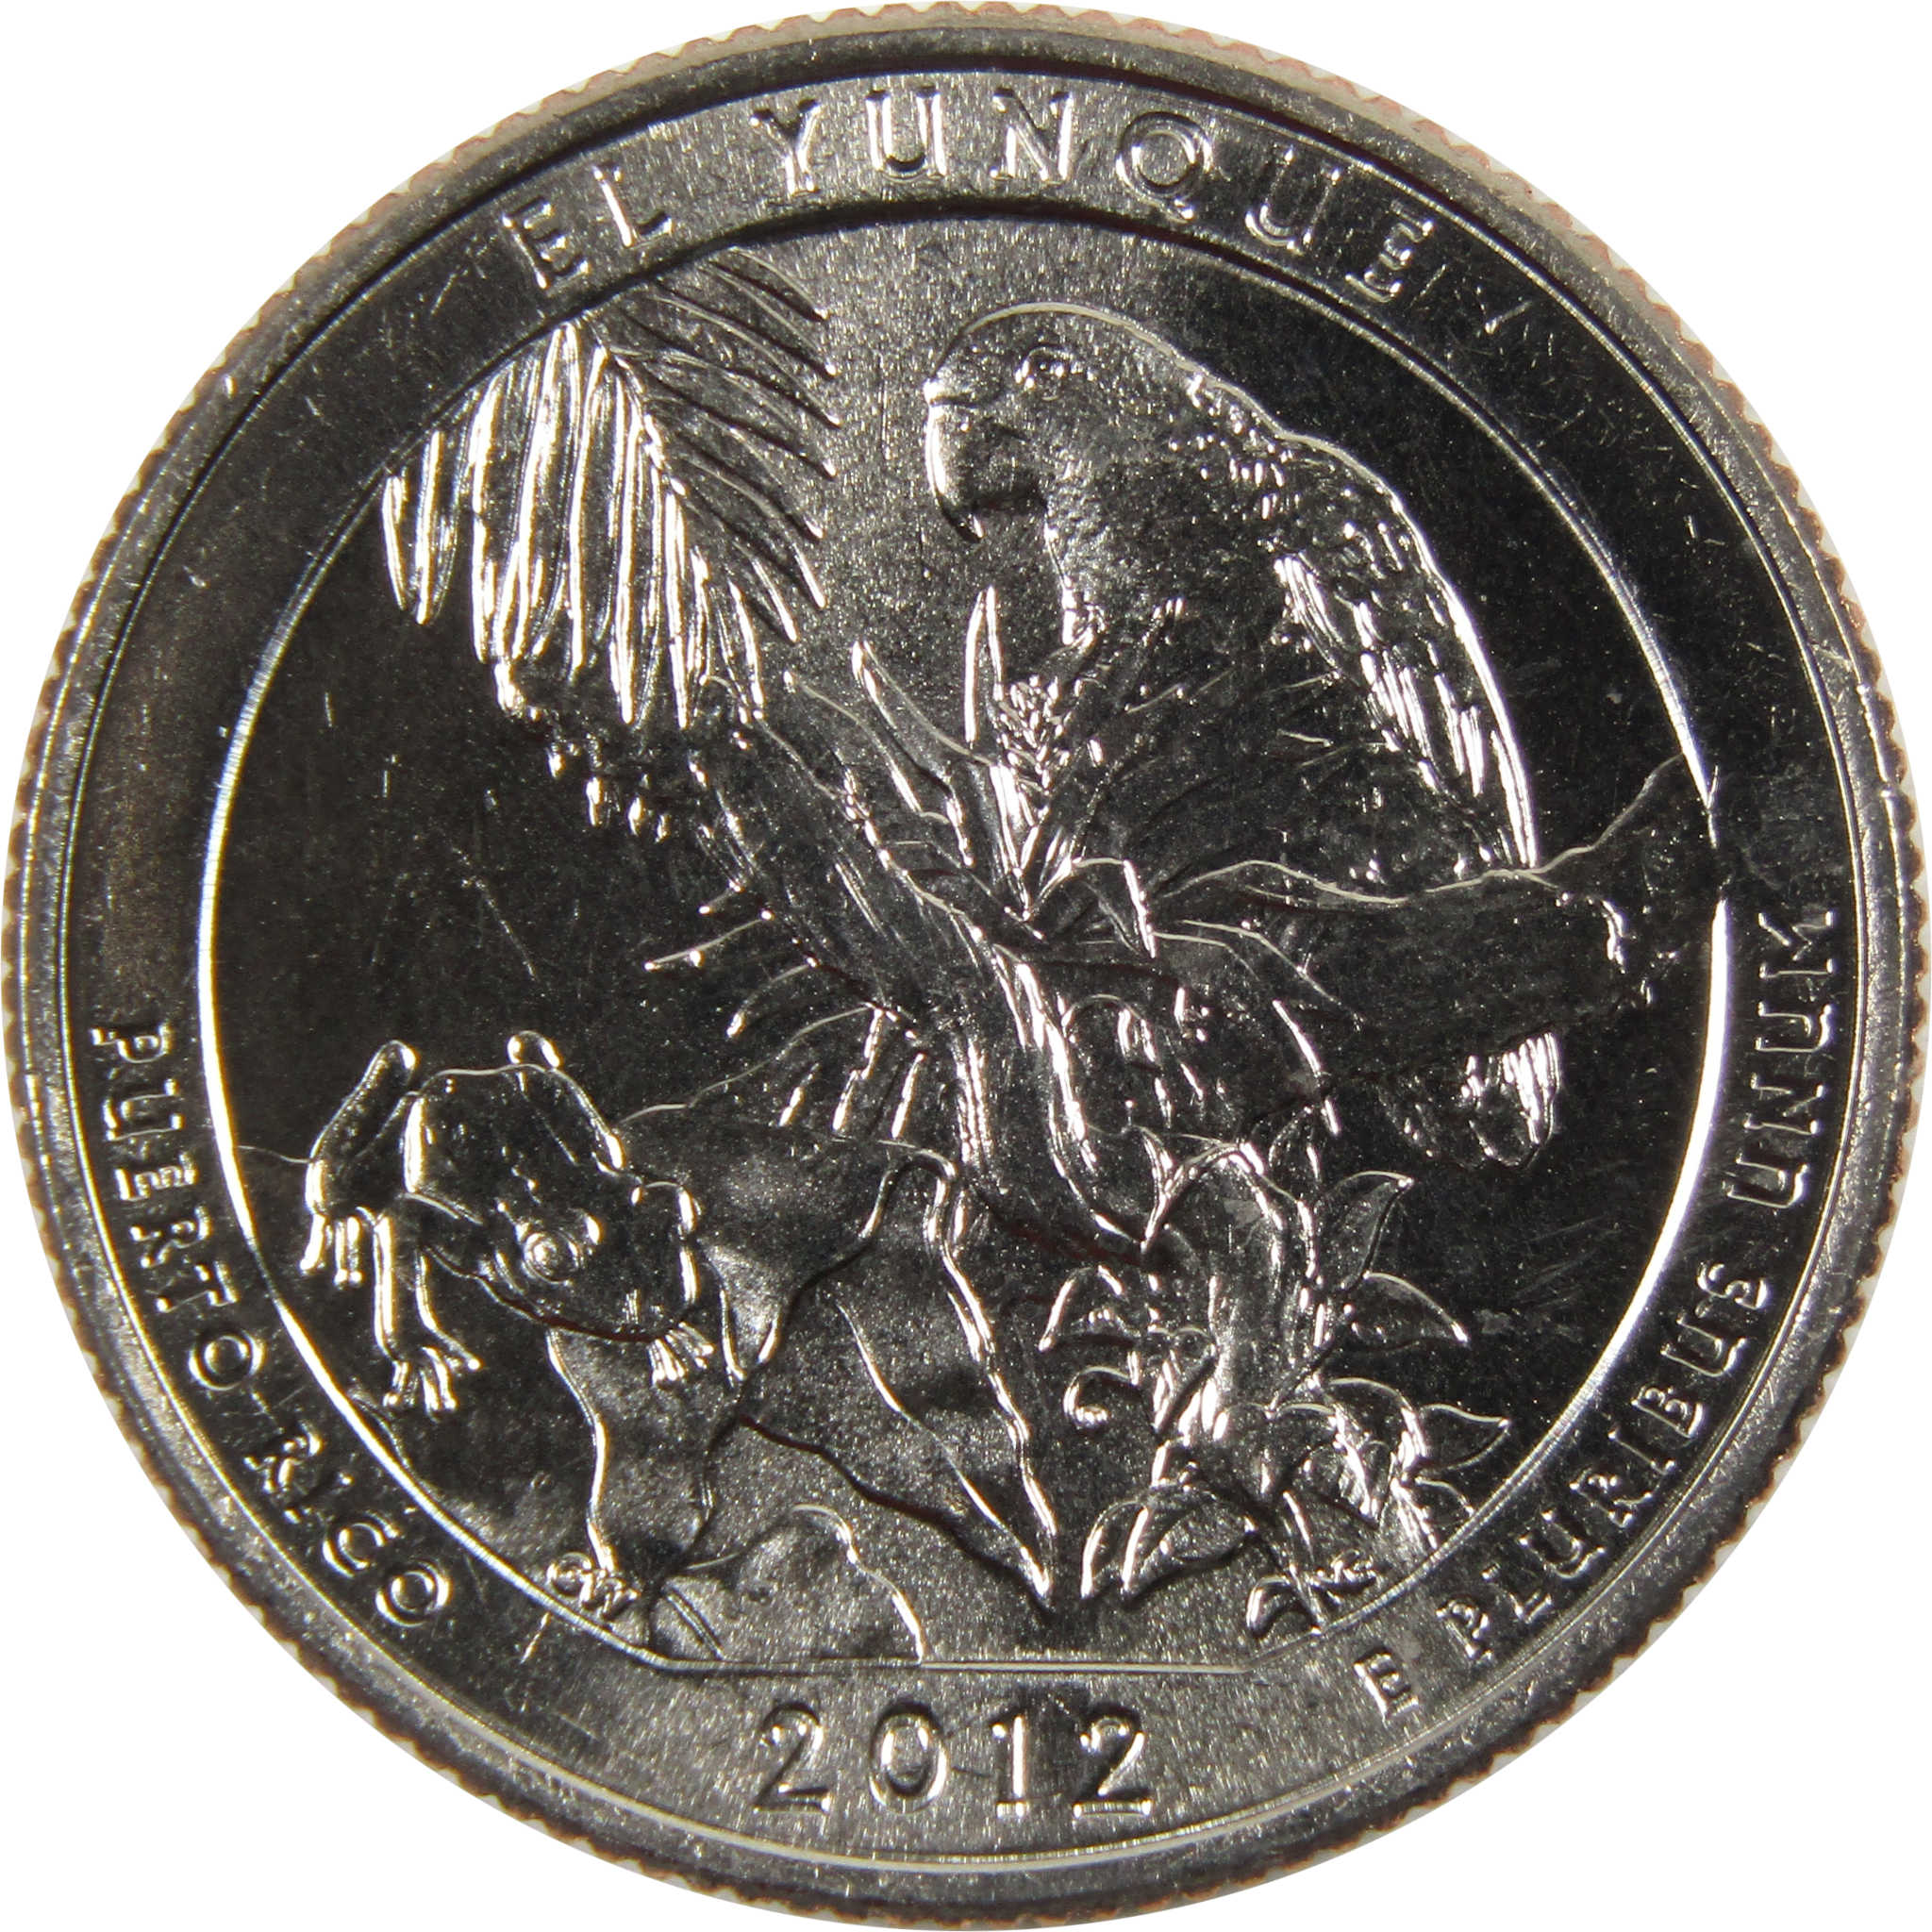 2012 D El Yunque National Forest Quarter BU Uncirculated Clad 25c Coin